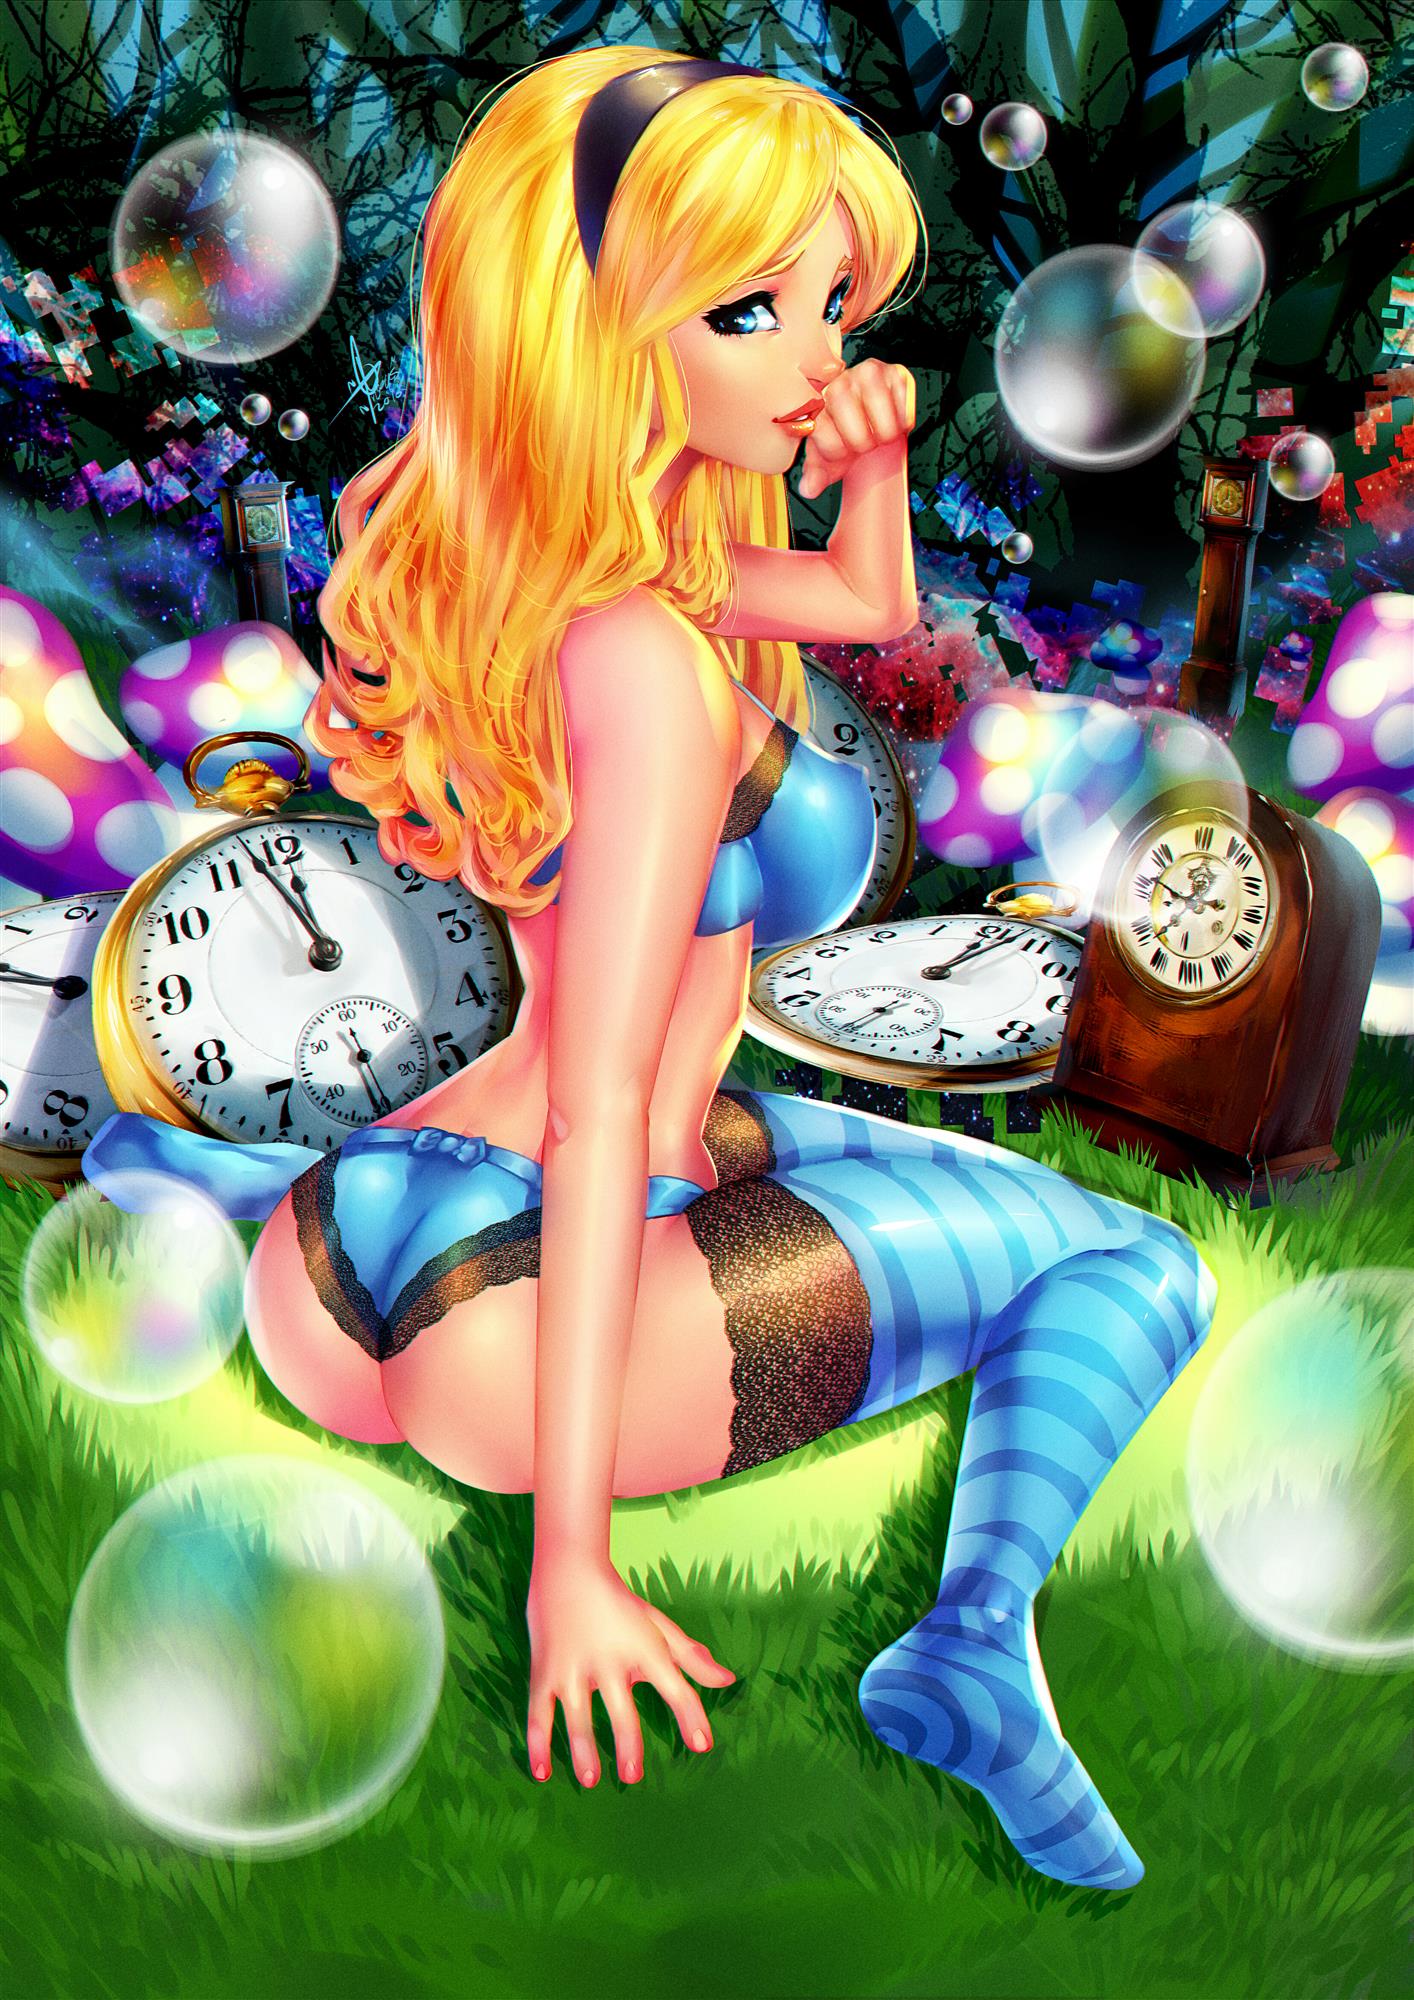 Sweet Alice in Wonderland gets her pussy fingered